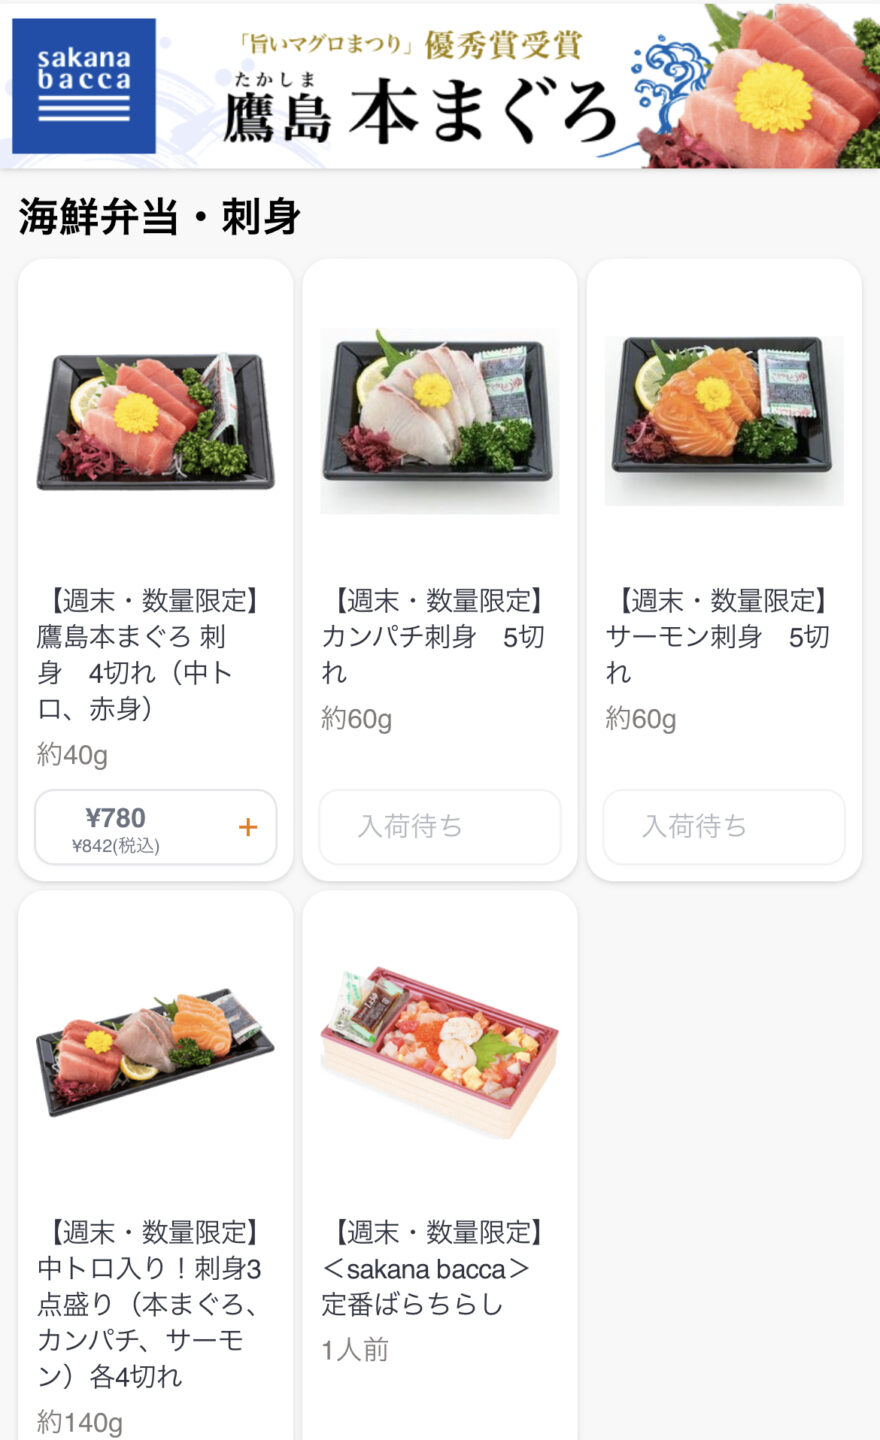 OniGOは魚屋“sakana bacca”（サカナバッカ）の刺身やばらちらしも購入できる